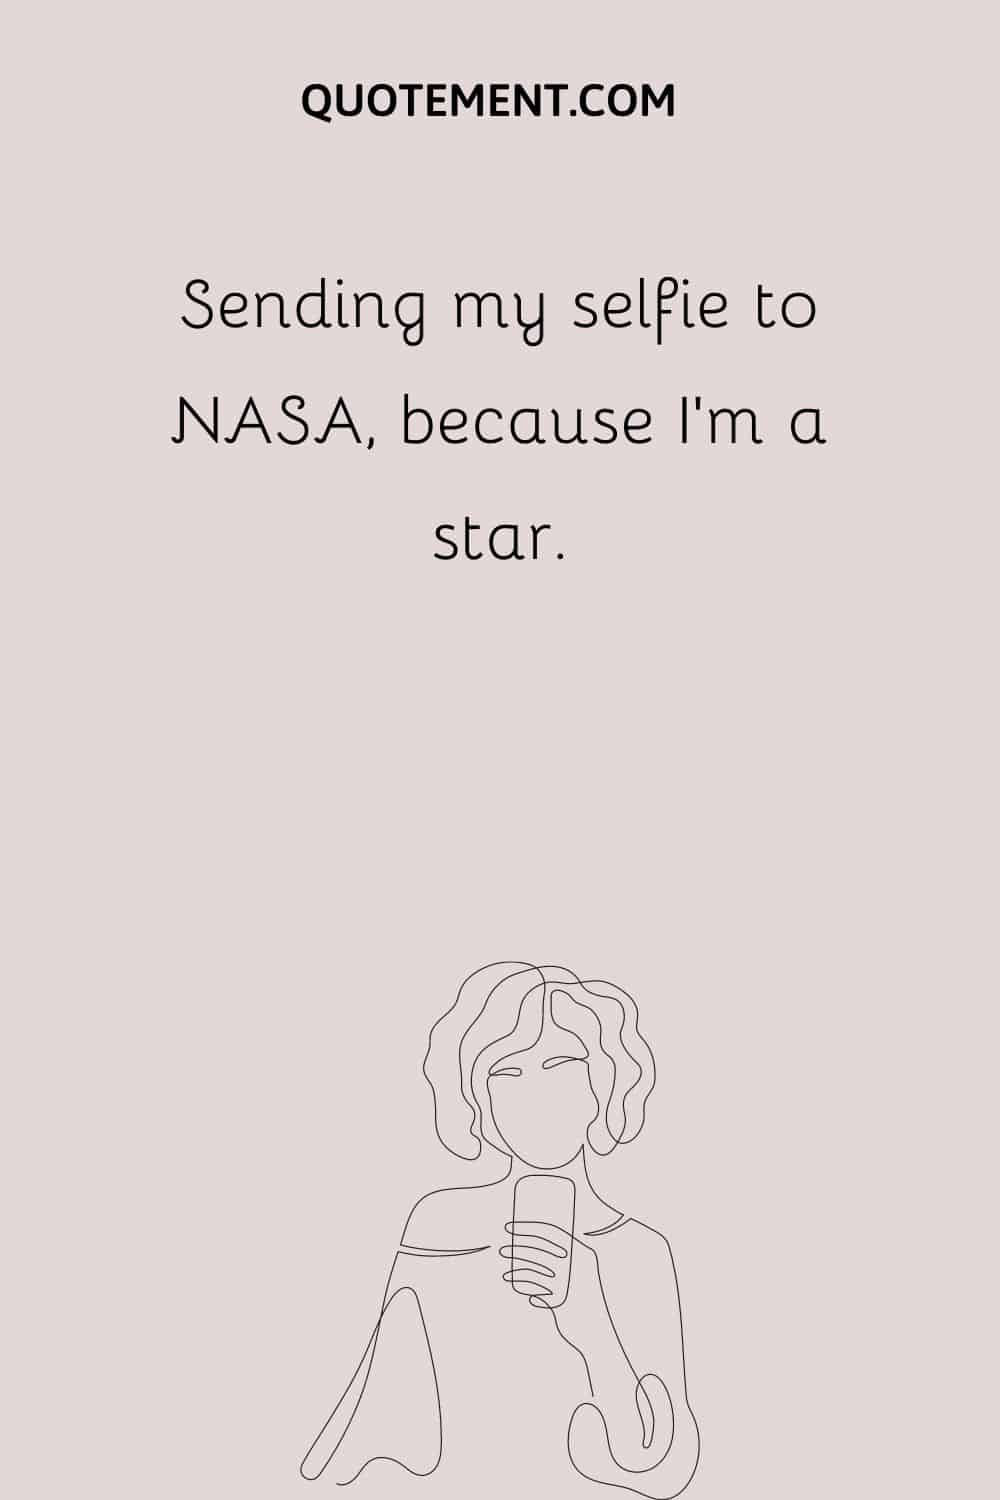 Sending my selfie to NASA, because I’m a star.